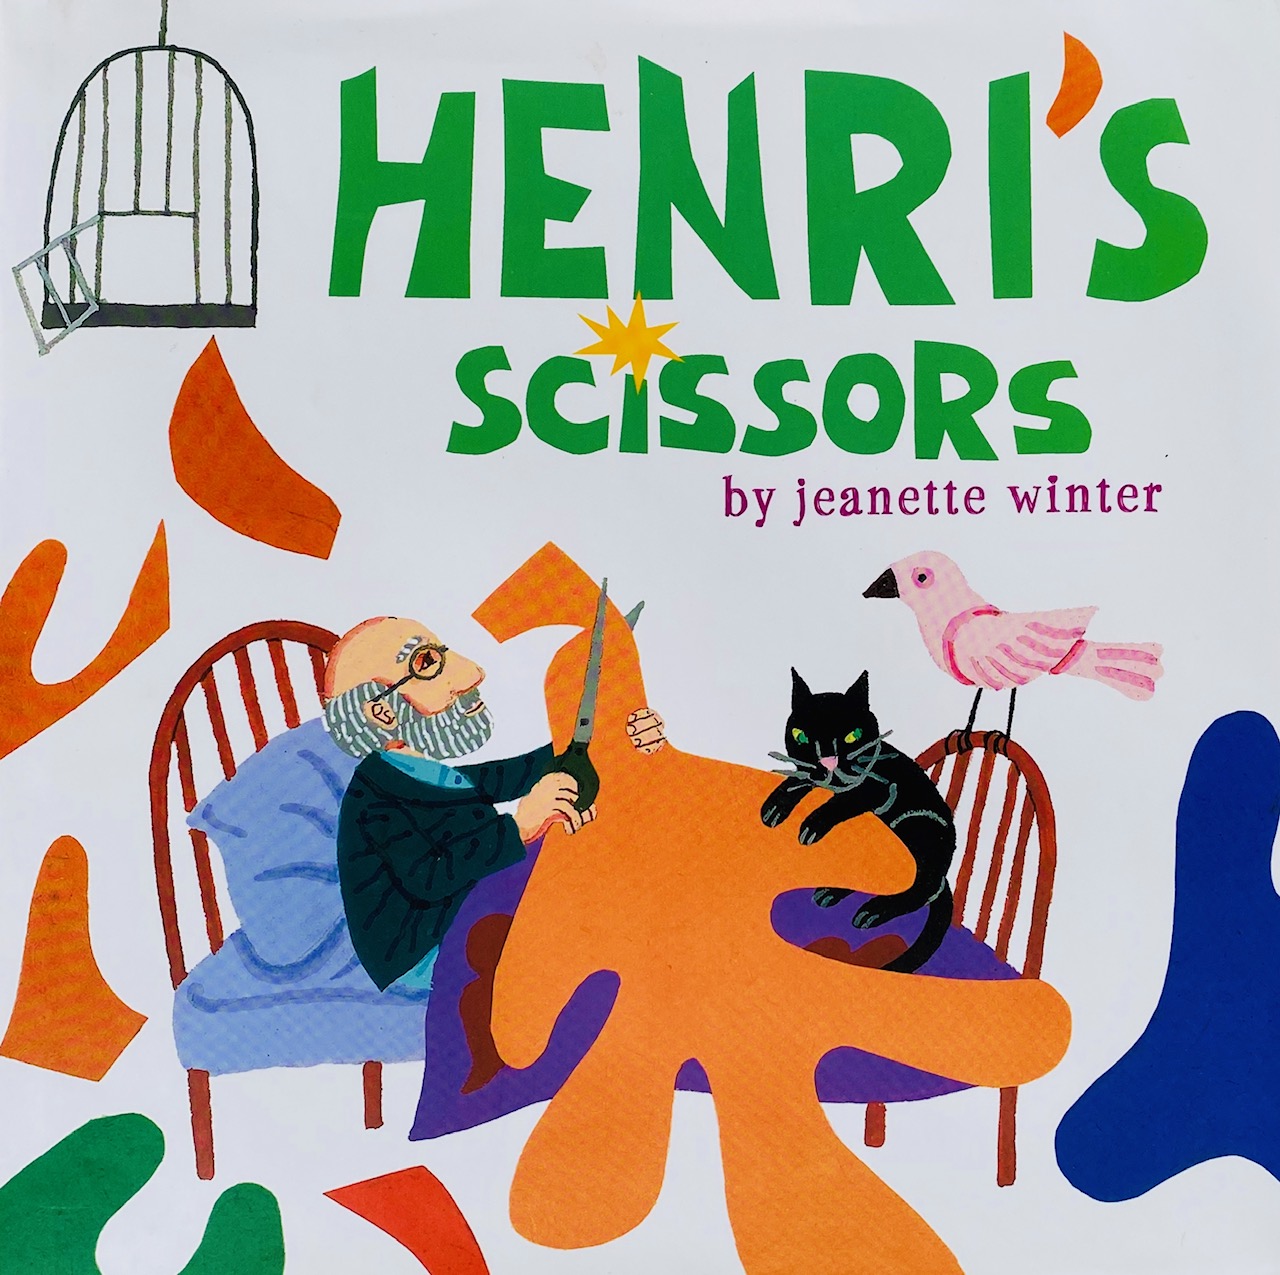 children's art book about Henri Matisse